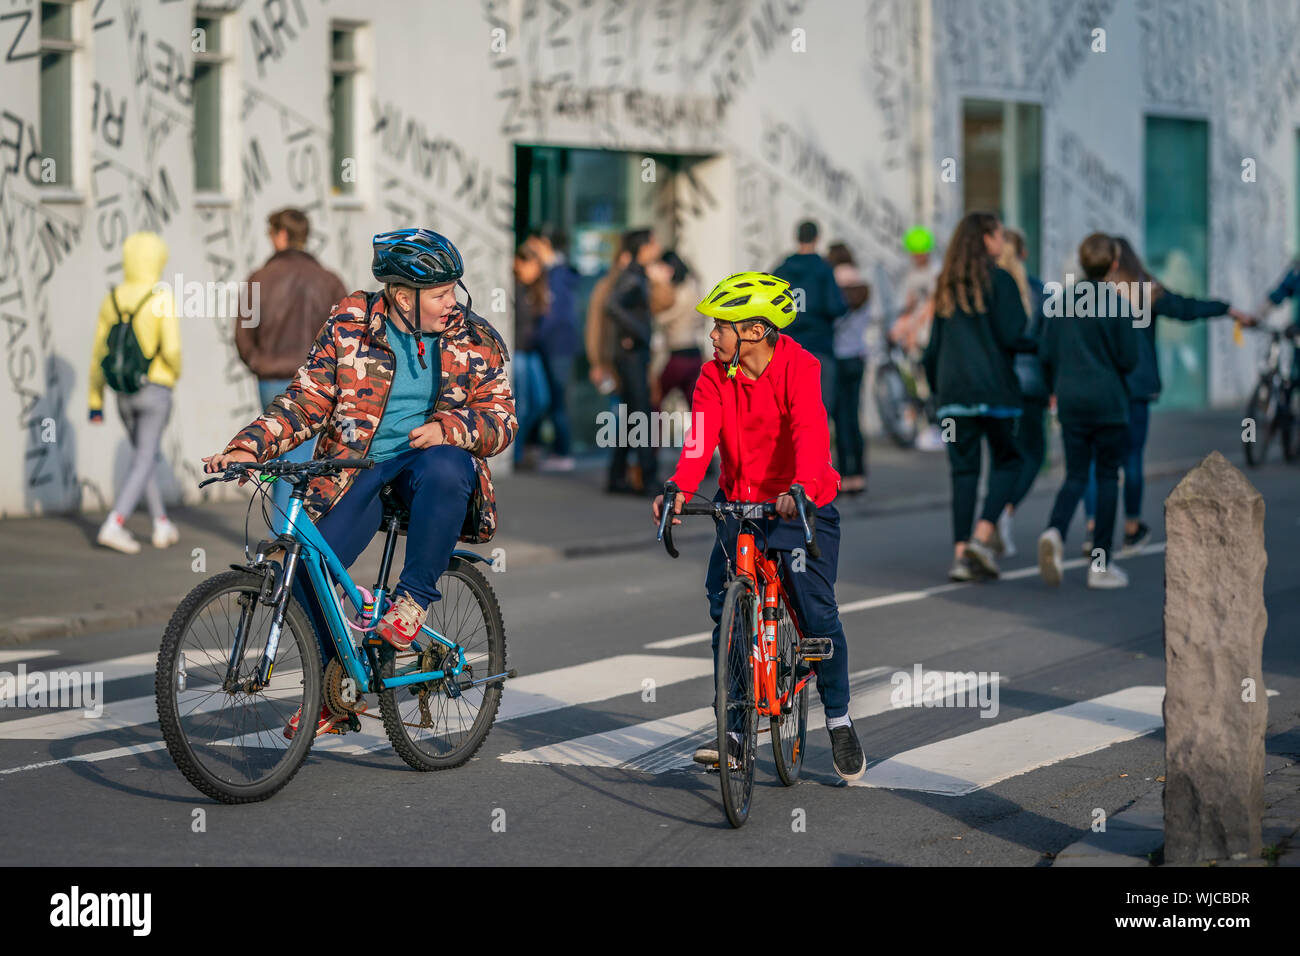 Kinder, Fahrräder, Menningarnott oder kulturellen Tag, Reykjavik, Island. Straßenszenen. Stockfoto